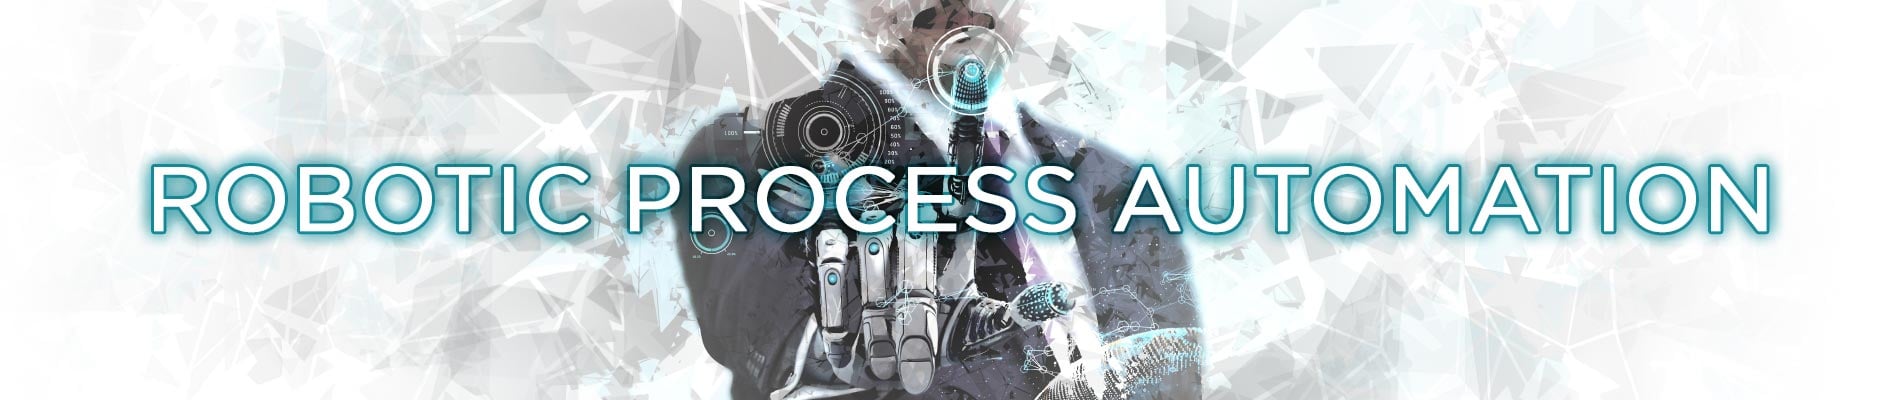 Robotic Process Automation web banner